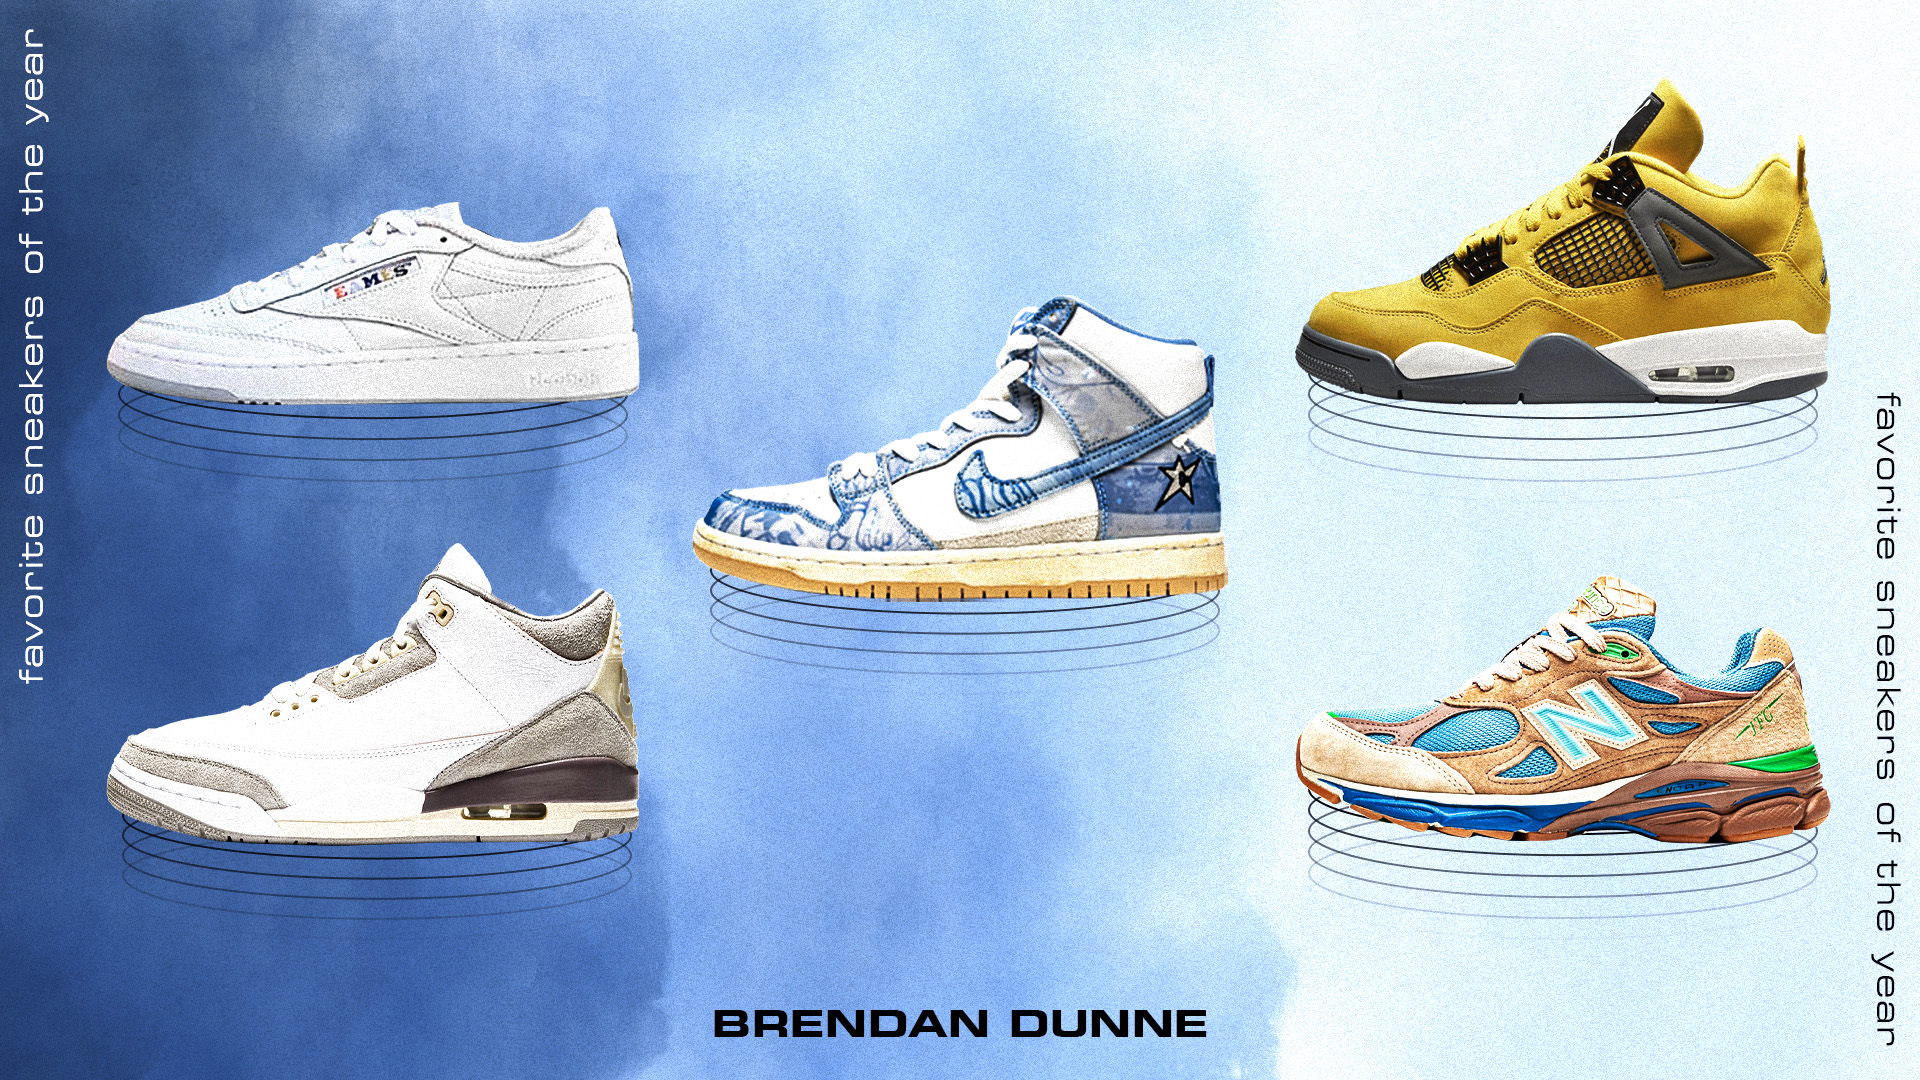 Brendan Dunne Favorite Sneakers 2021